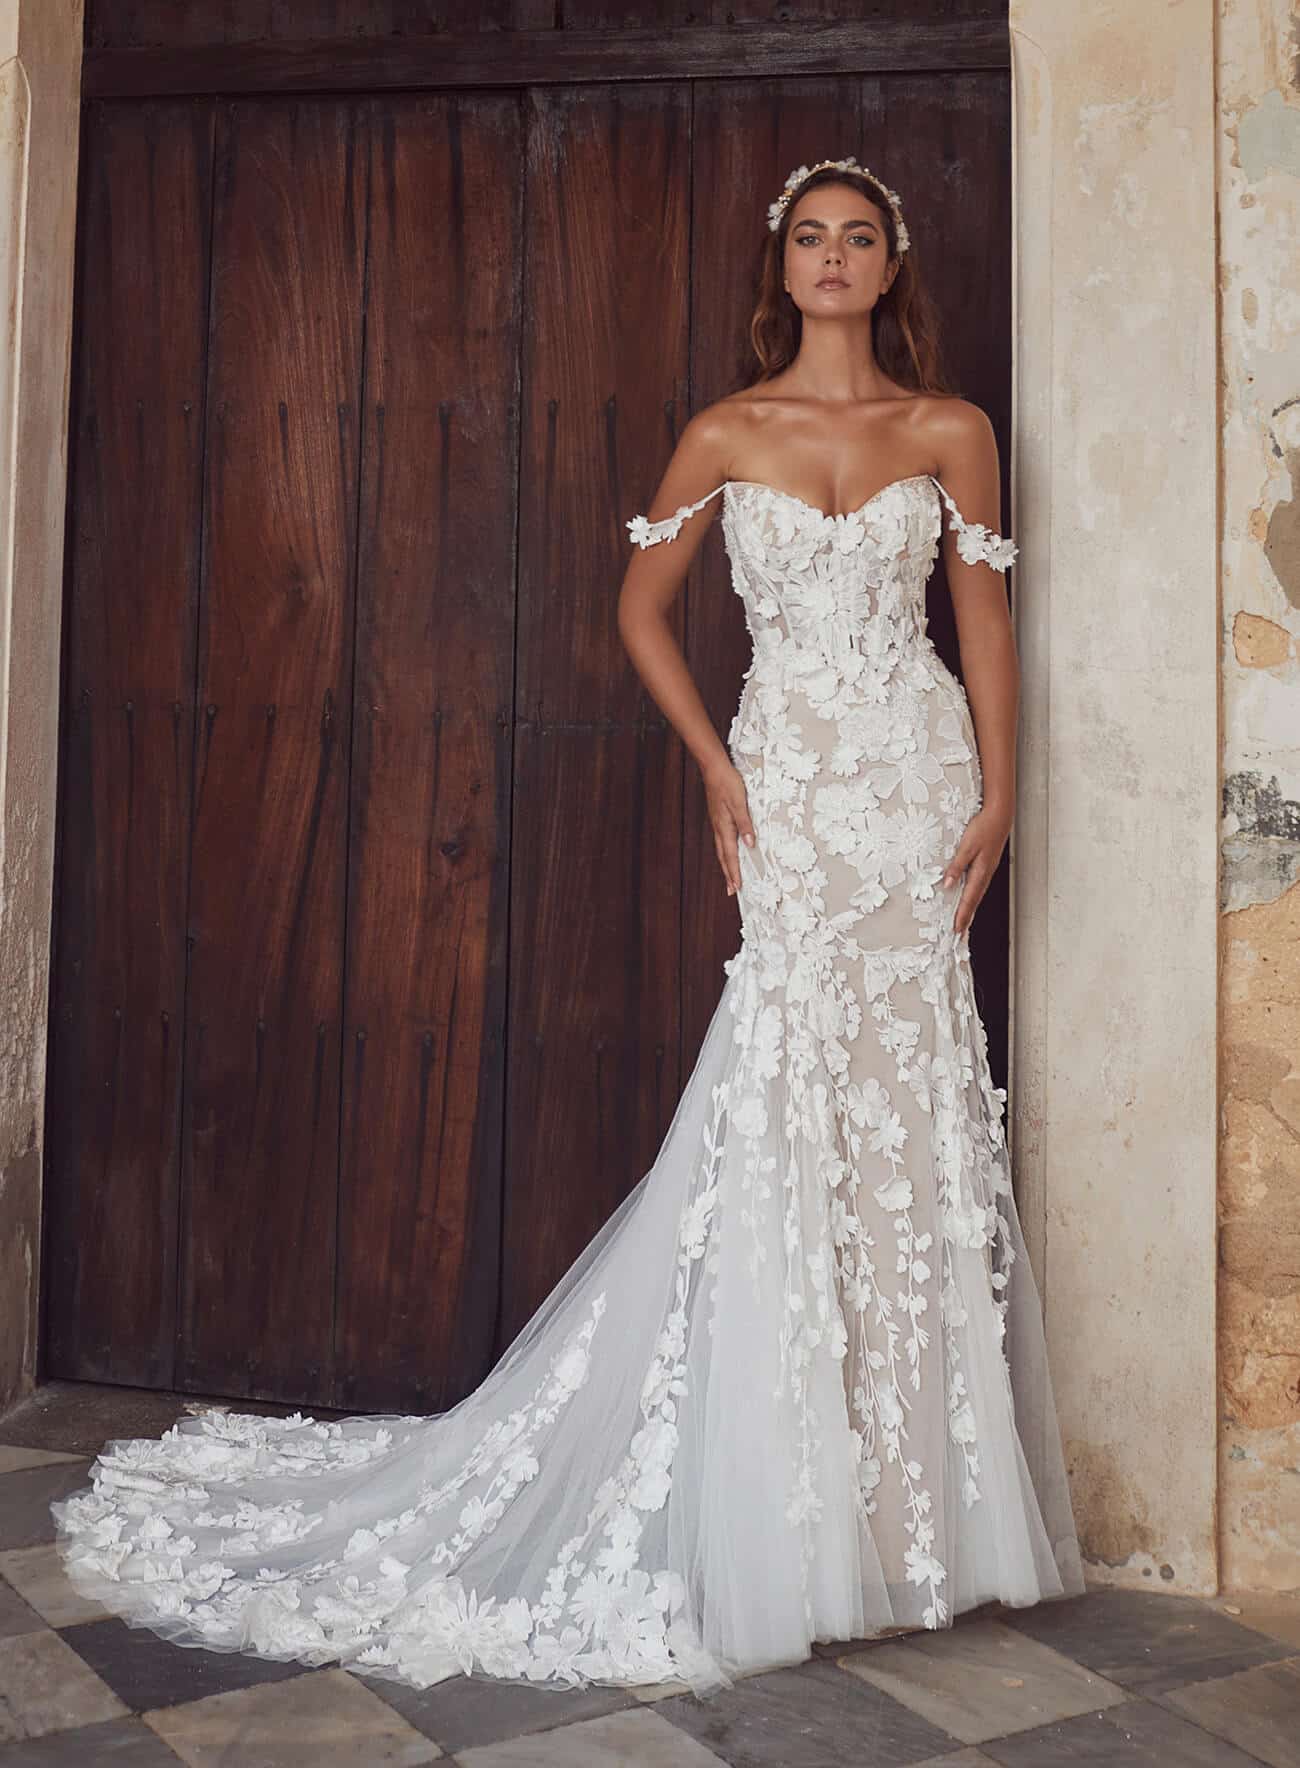 Calla Blanche, Angela-123102 Wedding Dress